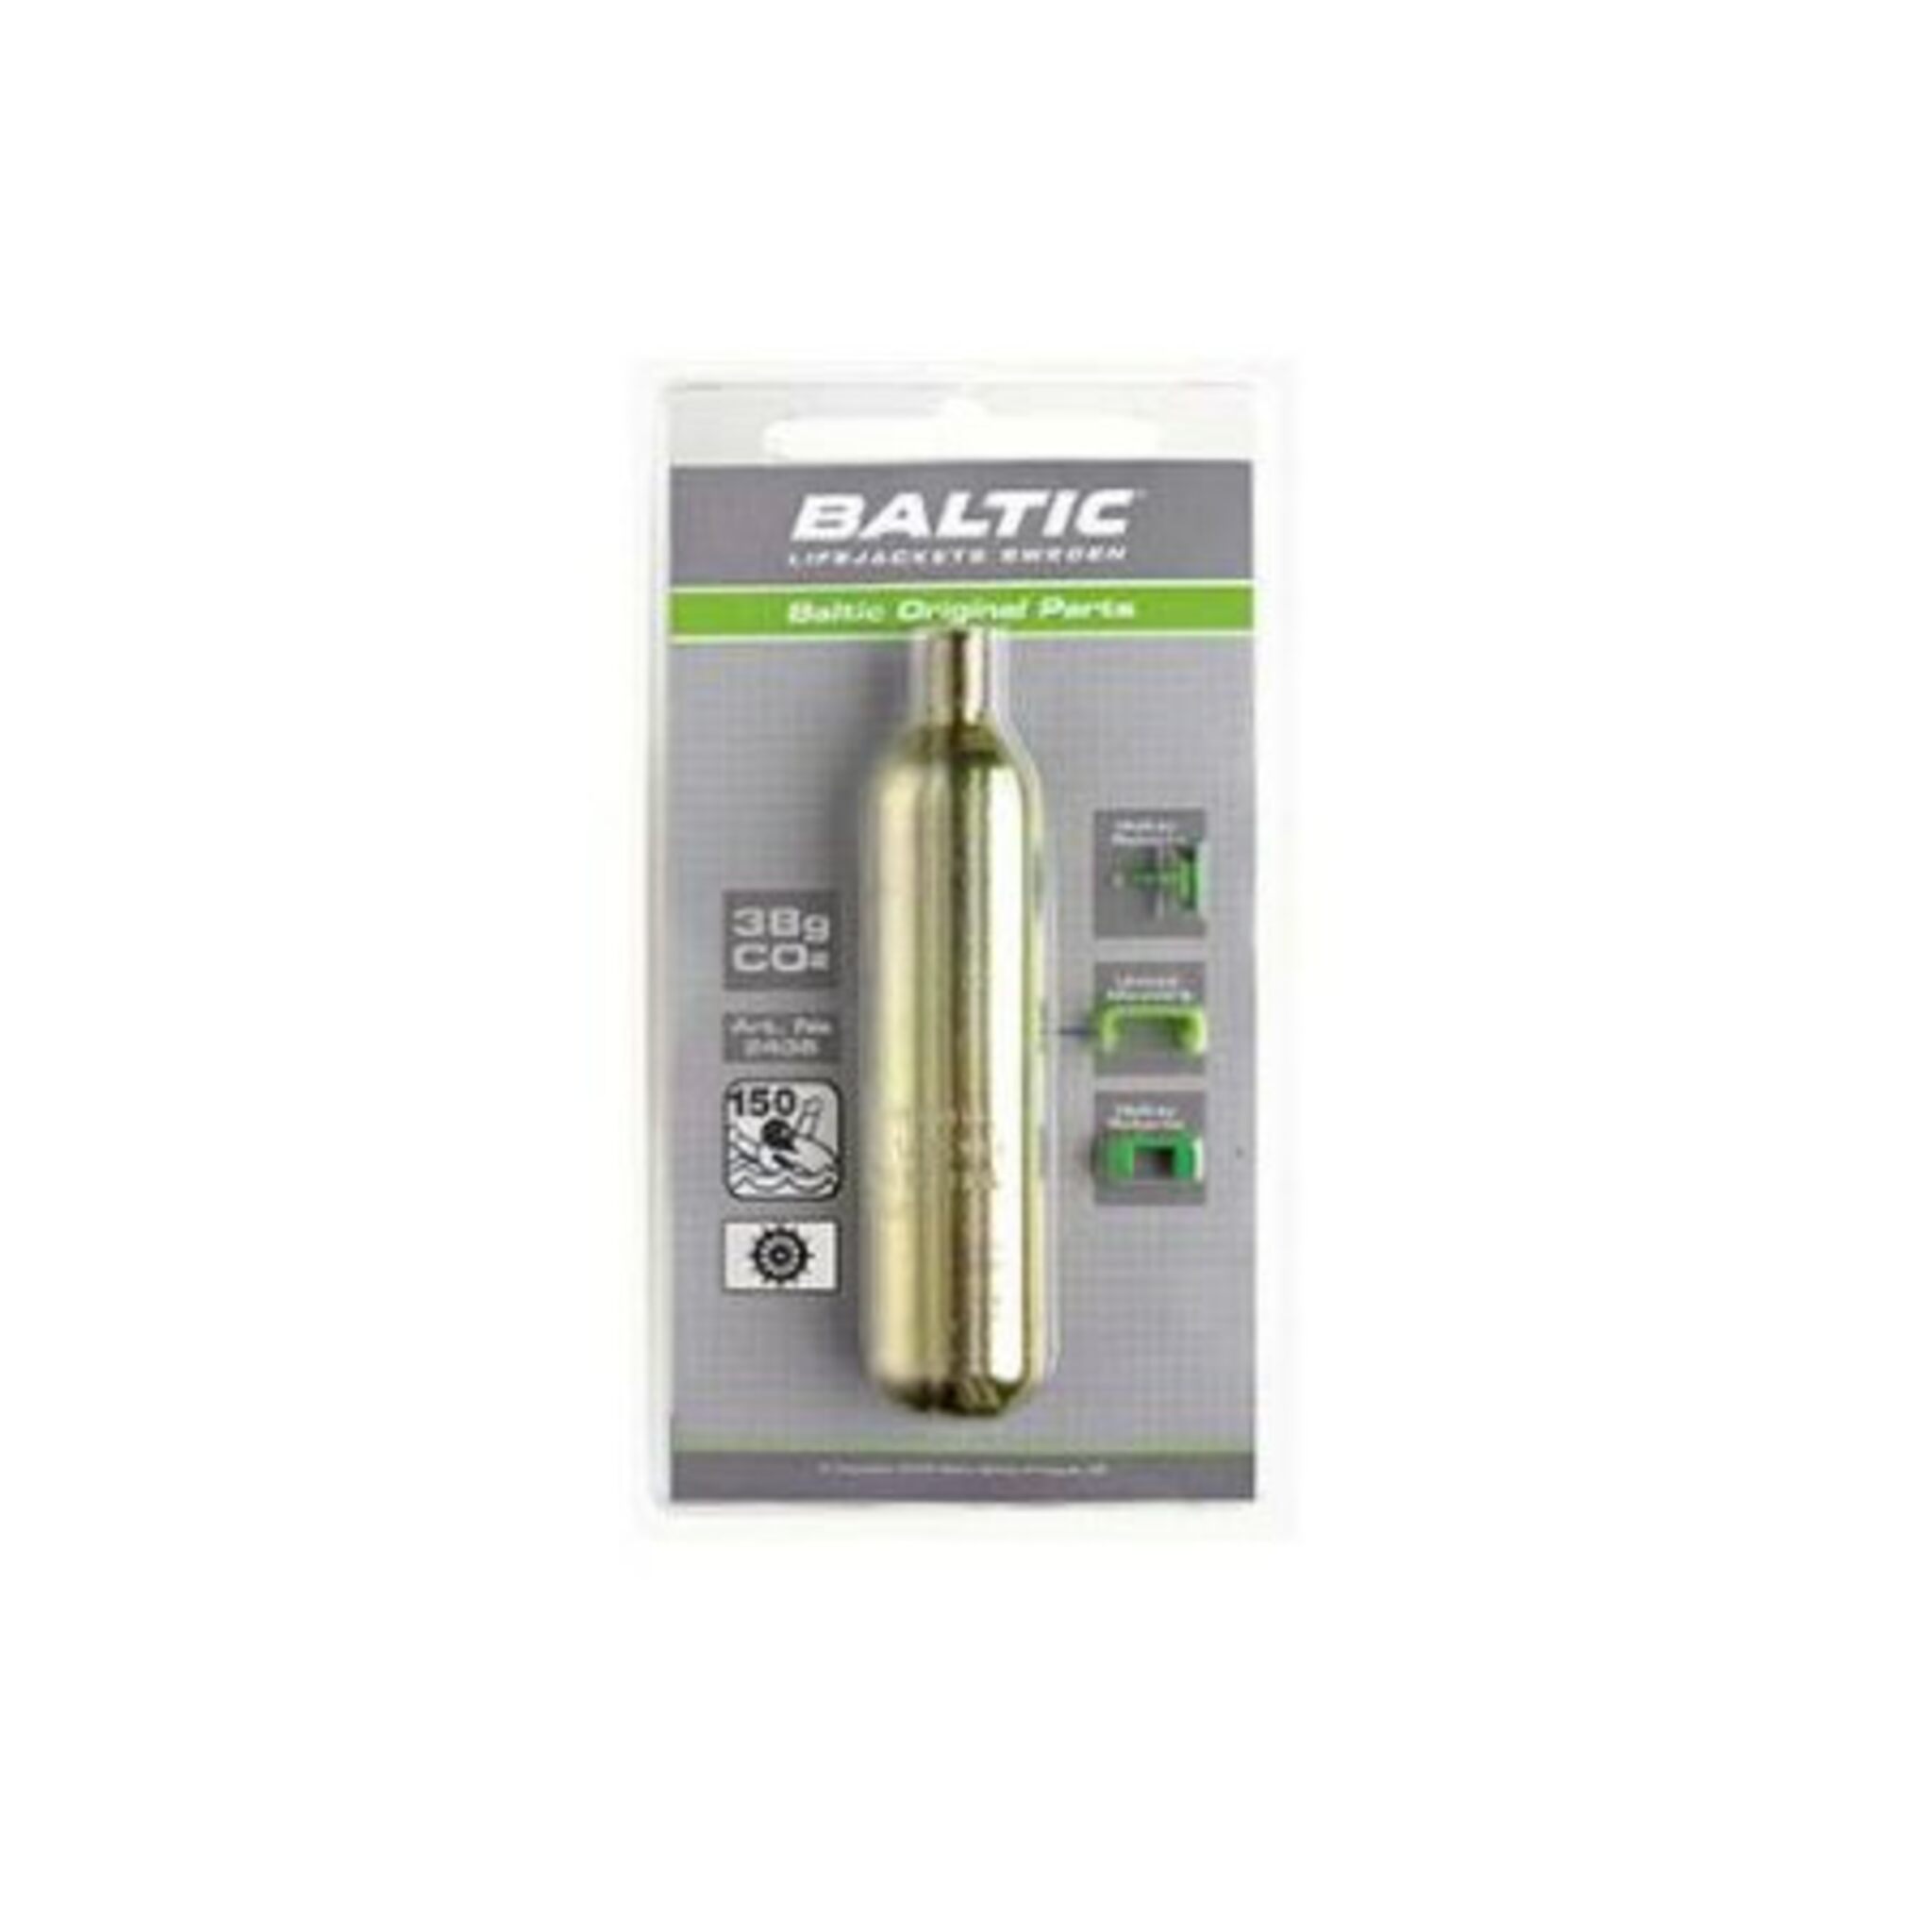 Replacement cartridge for BALTIC LEGEND 190 automatic lifejacket, CO2 cartridge, 38 g